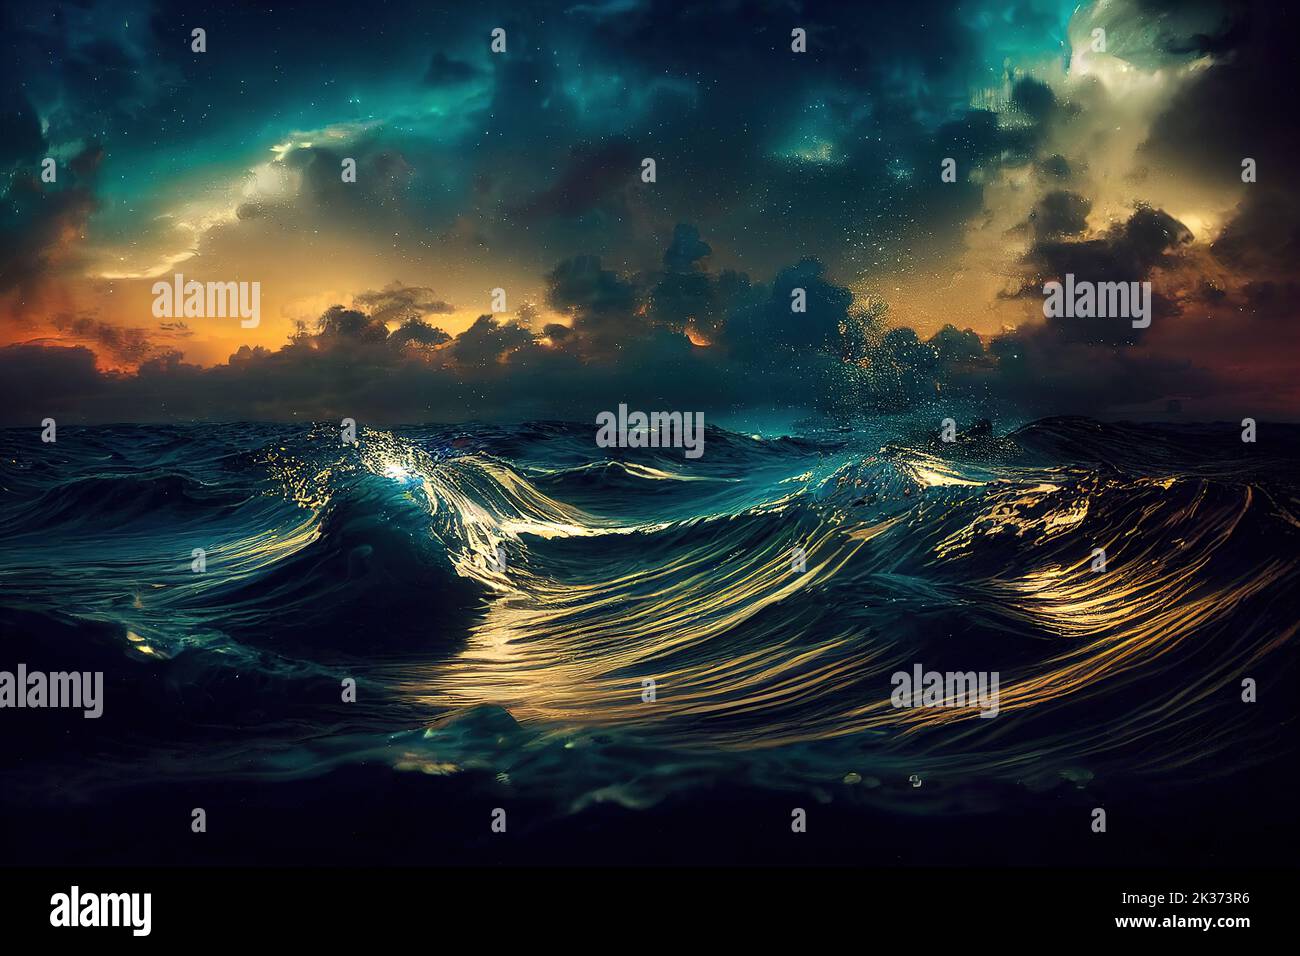 Ocean stormy fantasy night landscape sea starry dark waves stars. Style impressionism Stock Photo